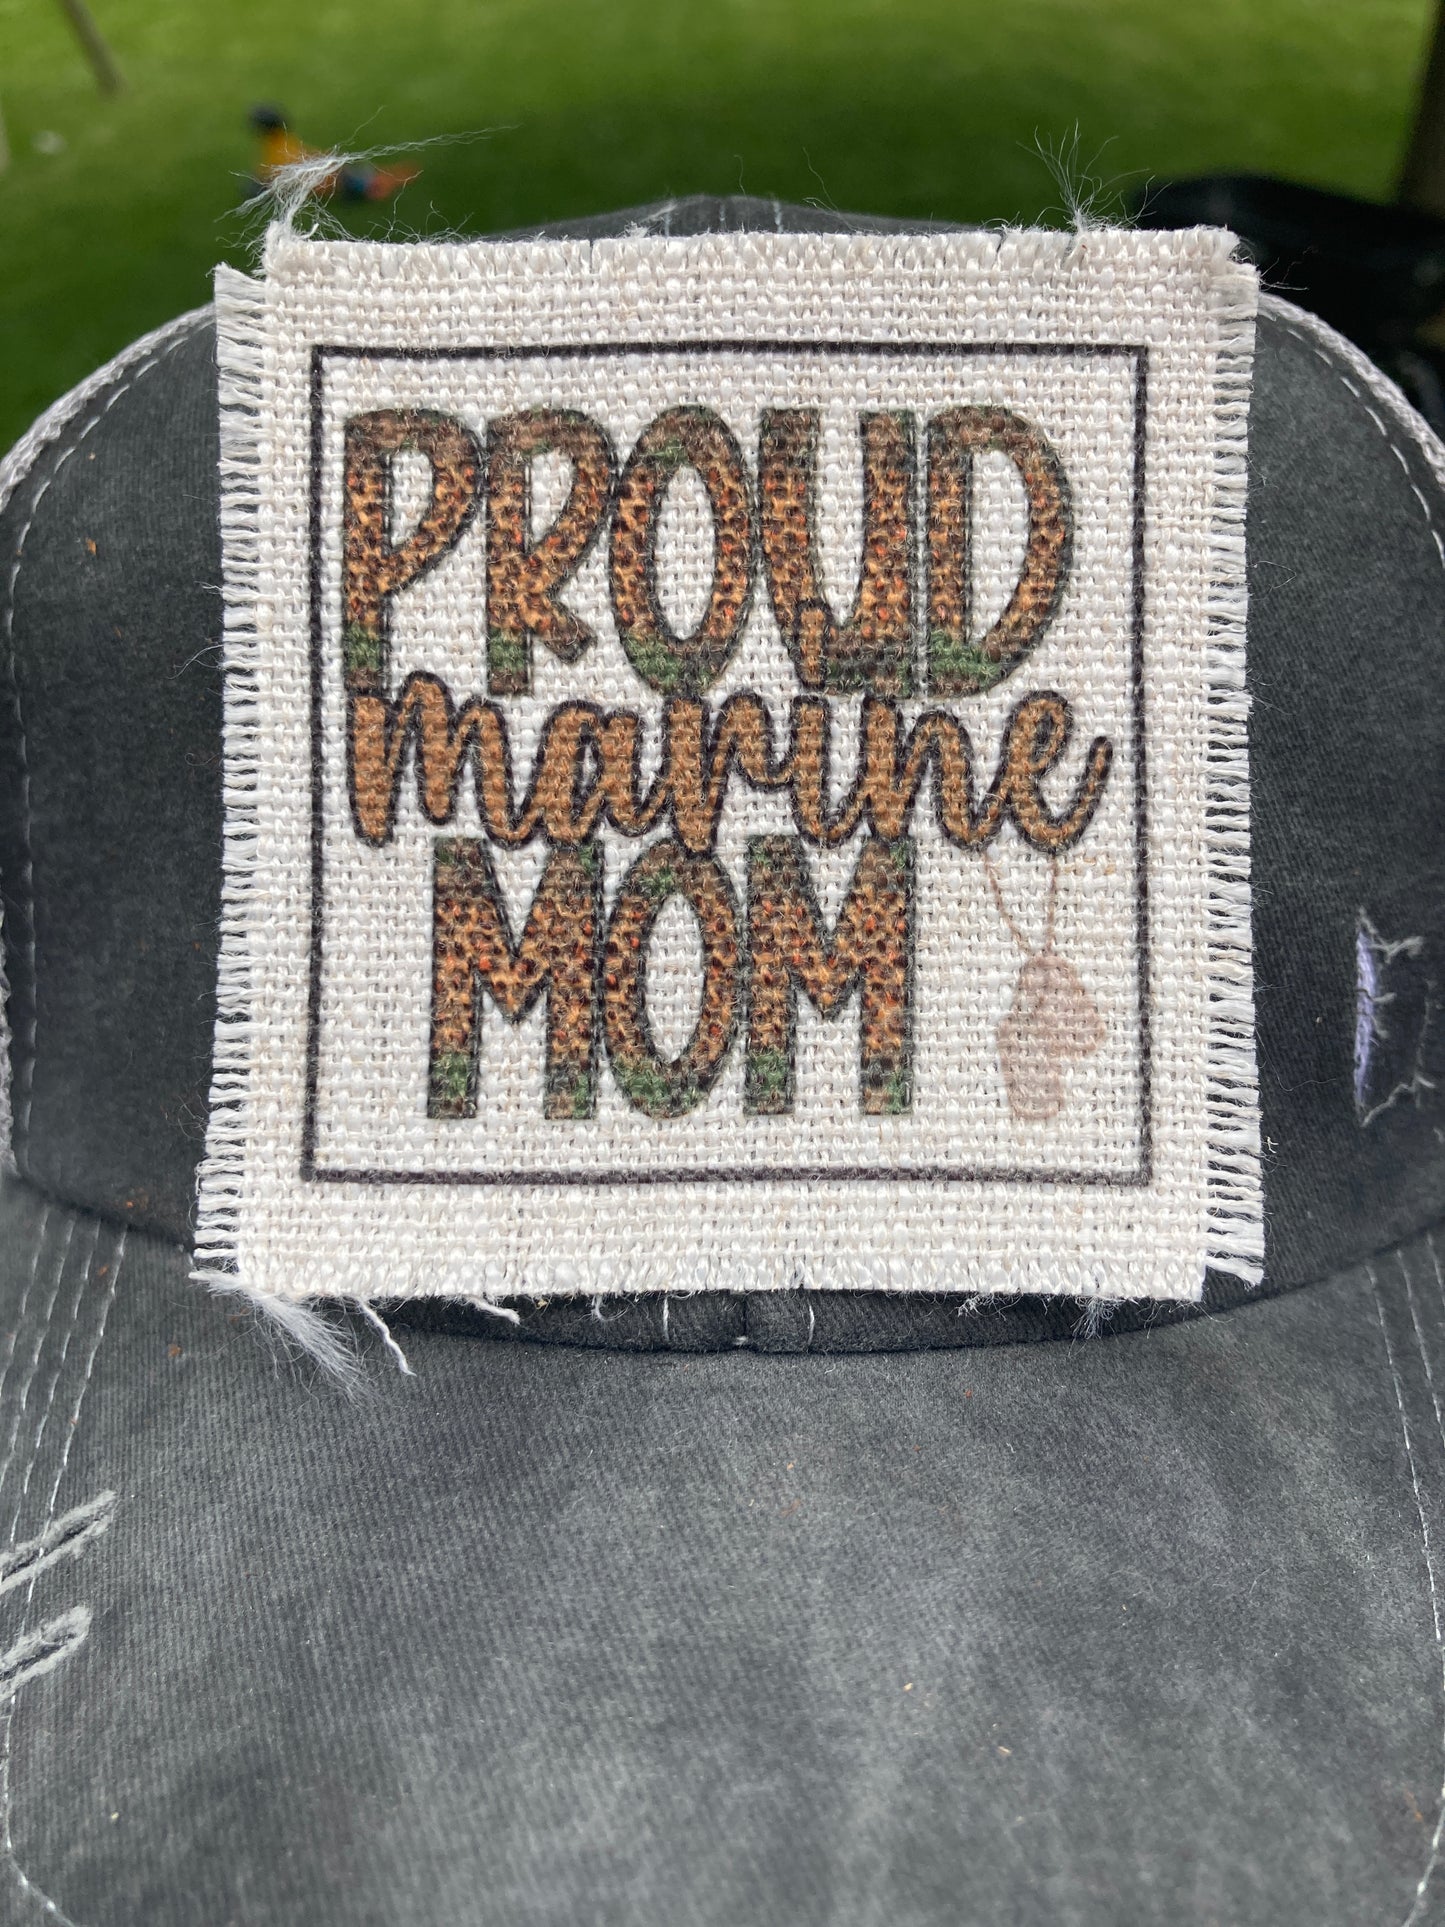 Proud Marine Mom Hat Patch